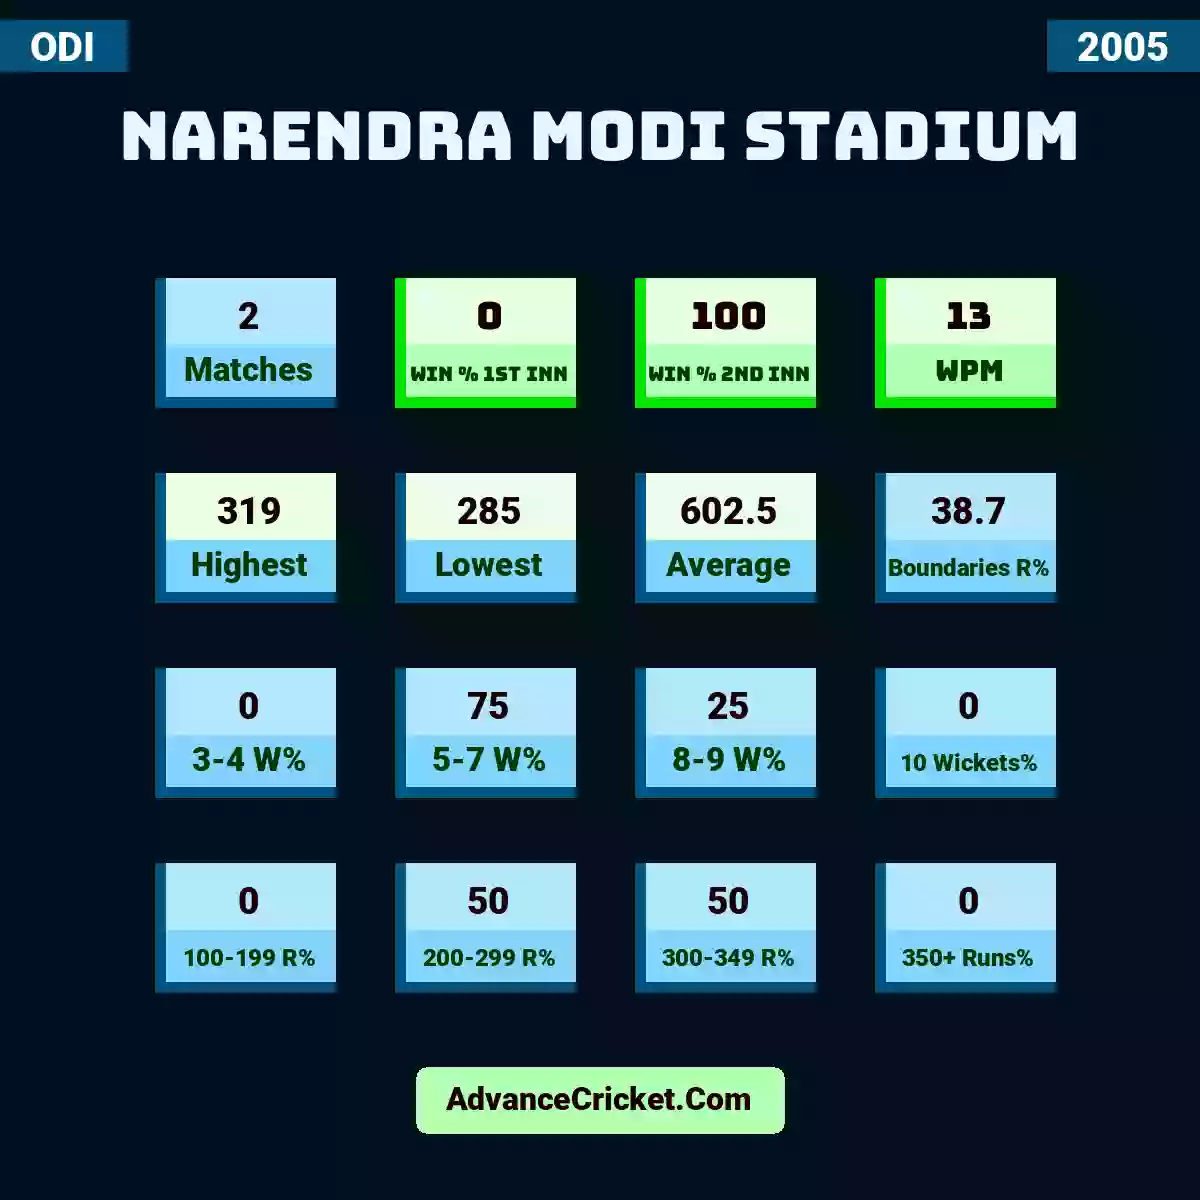 Image showing Narendra Modi Stadium with Matches: 2, Win % 1st Inn: 0, Win % 2nd Inn: 100, WPM: 13, Highest: 319, Lowest: 285, Average: 602.5, Boundaries R%: 38.7, 3-4 W%: 0, 5-7 W%: 75, 8-9 W%: 25, 10 Wickets%: 0, 100-199 R%: 0, 200-299 R%: 50, 300-349 R%: 50, 350+ Runs%: 0.